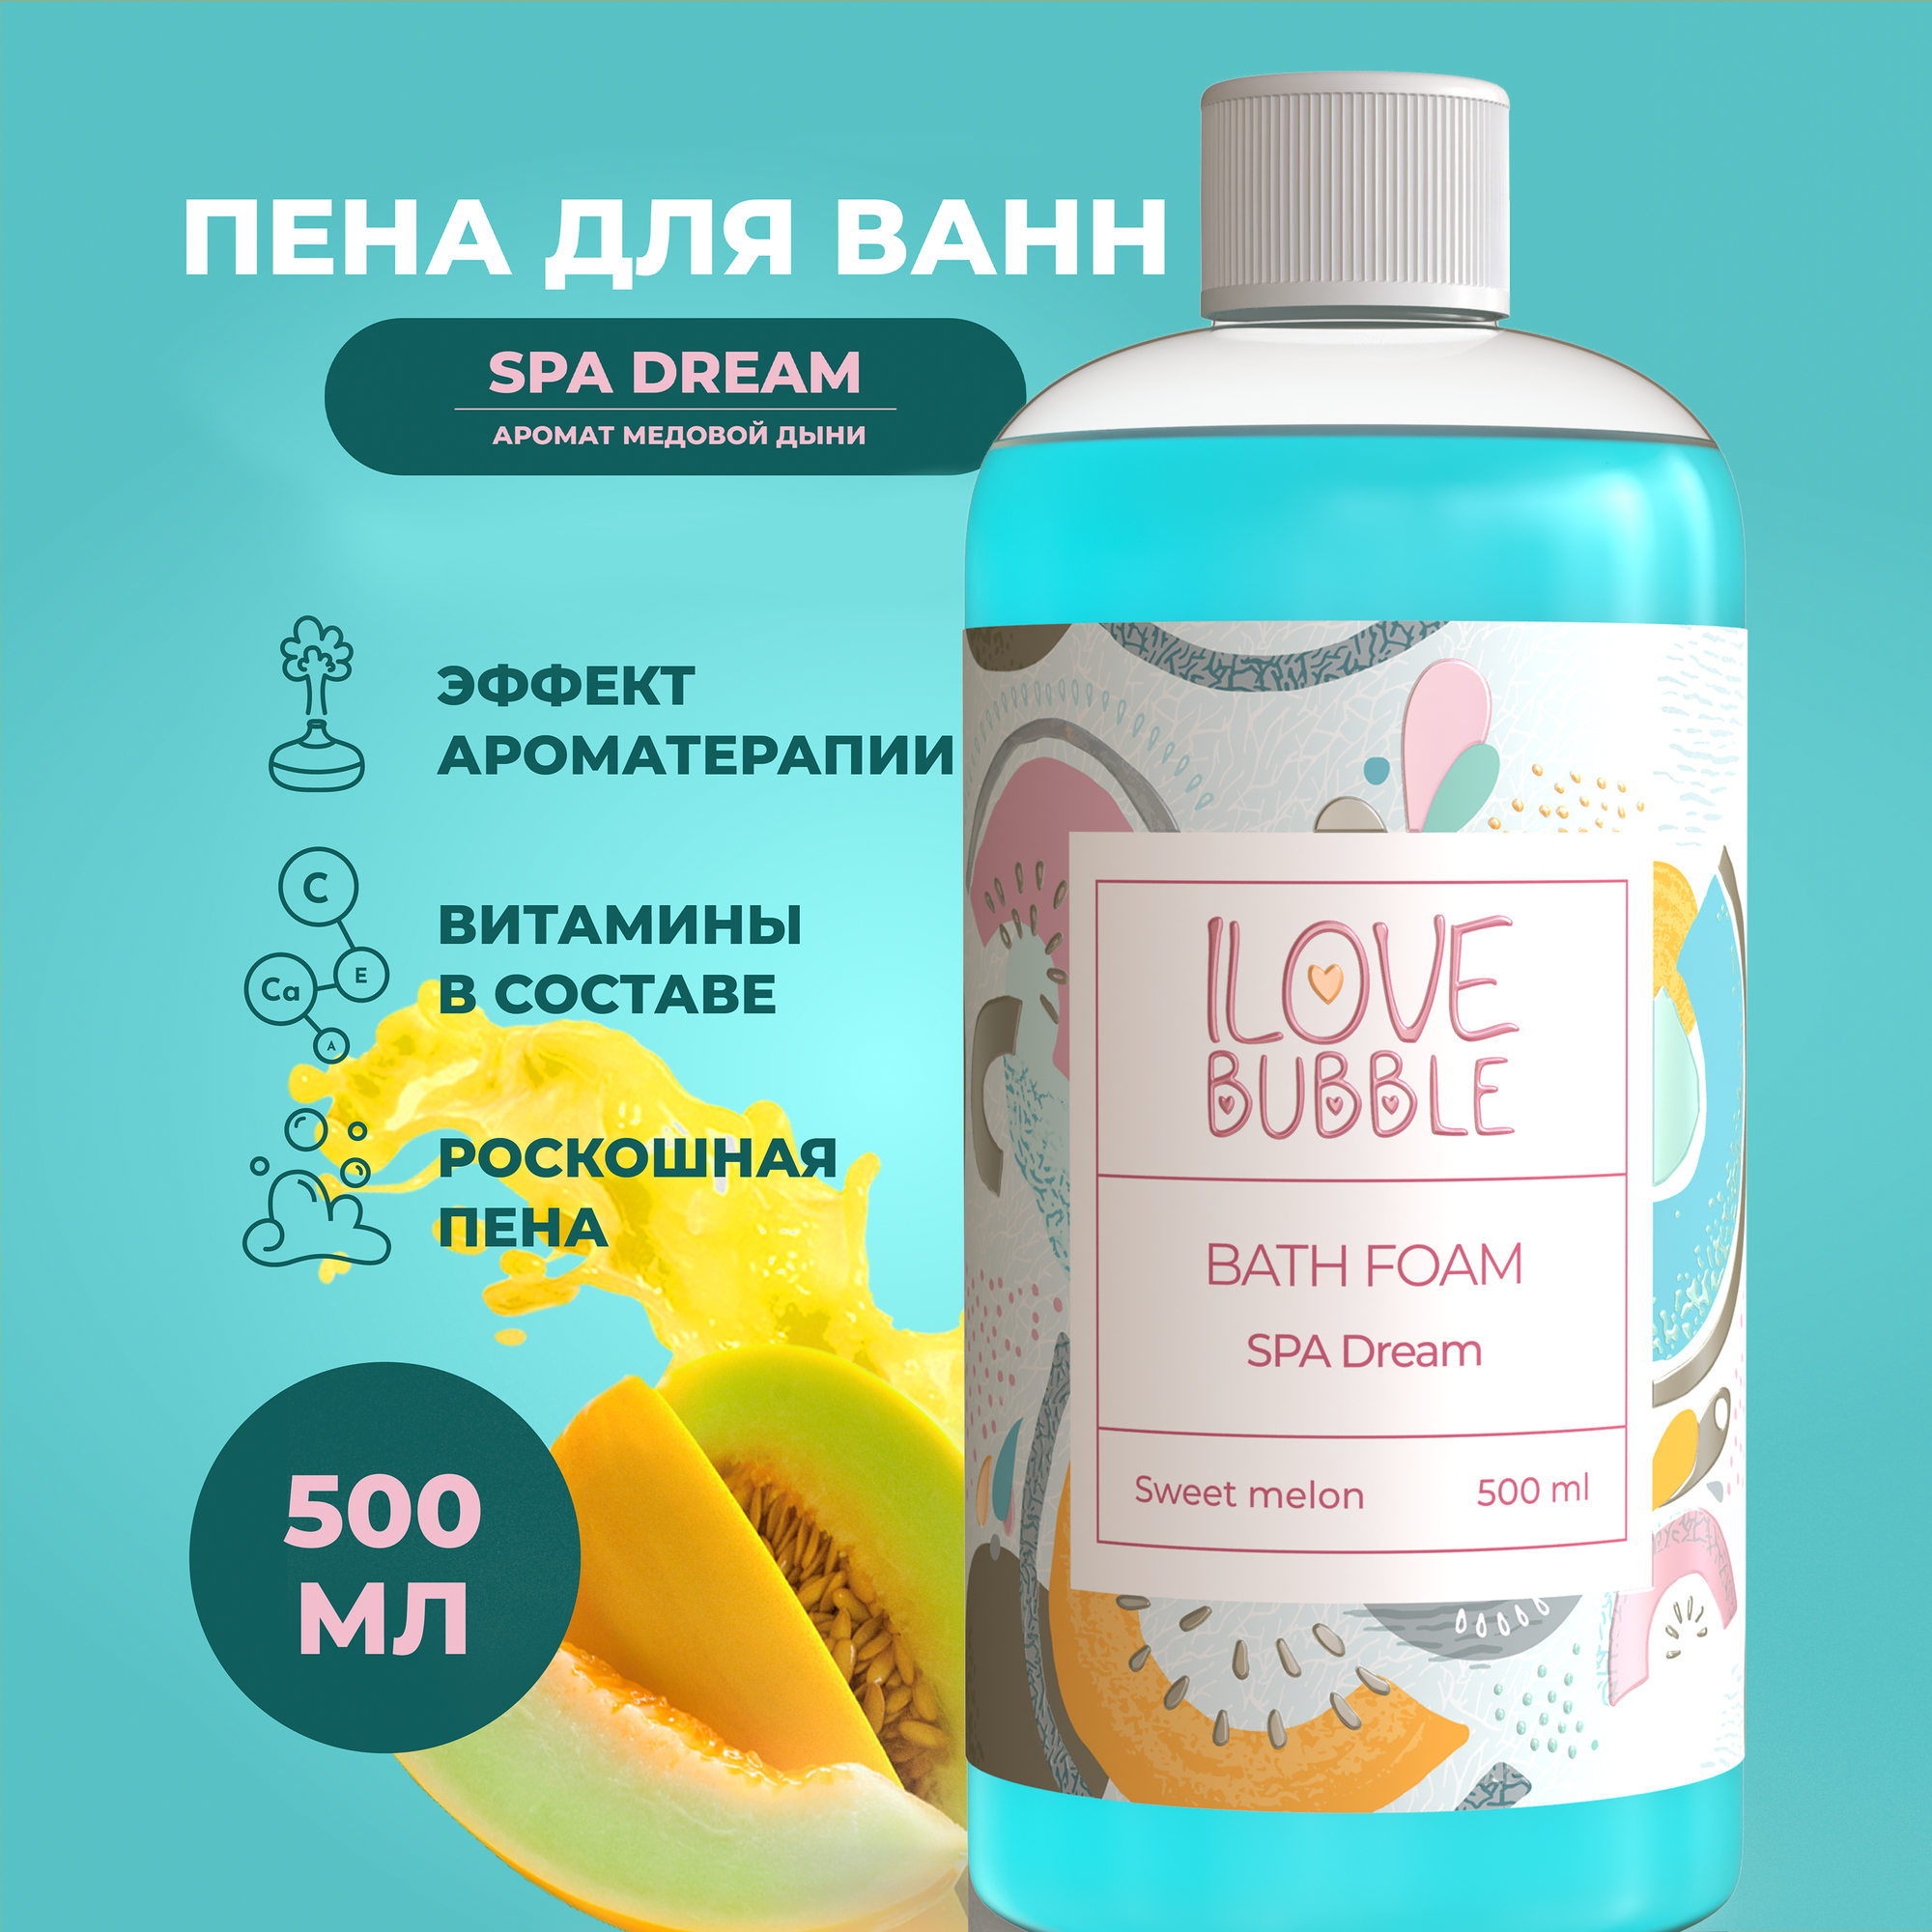 ILOVE mg Натуральная пена для ванны с ароматом спелой дыни спа-уход. Объем 500 мл.